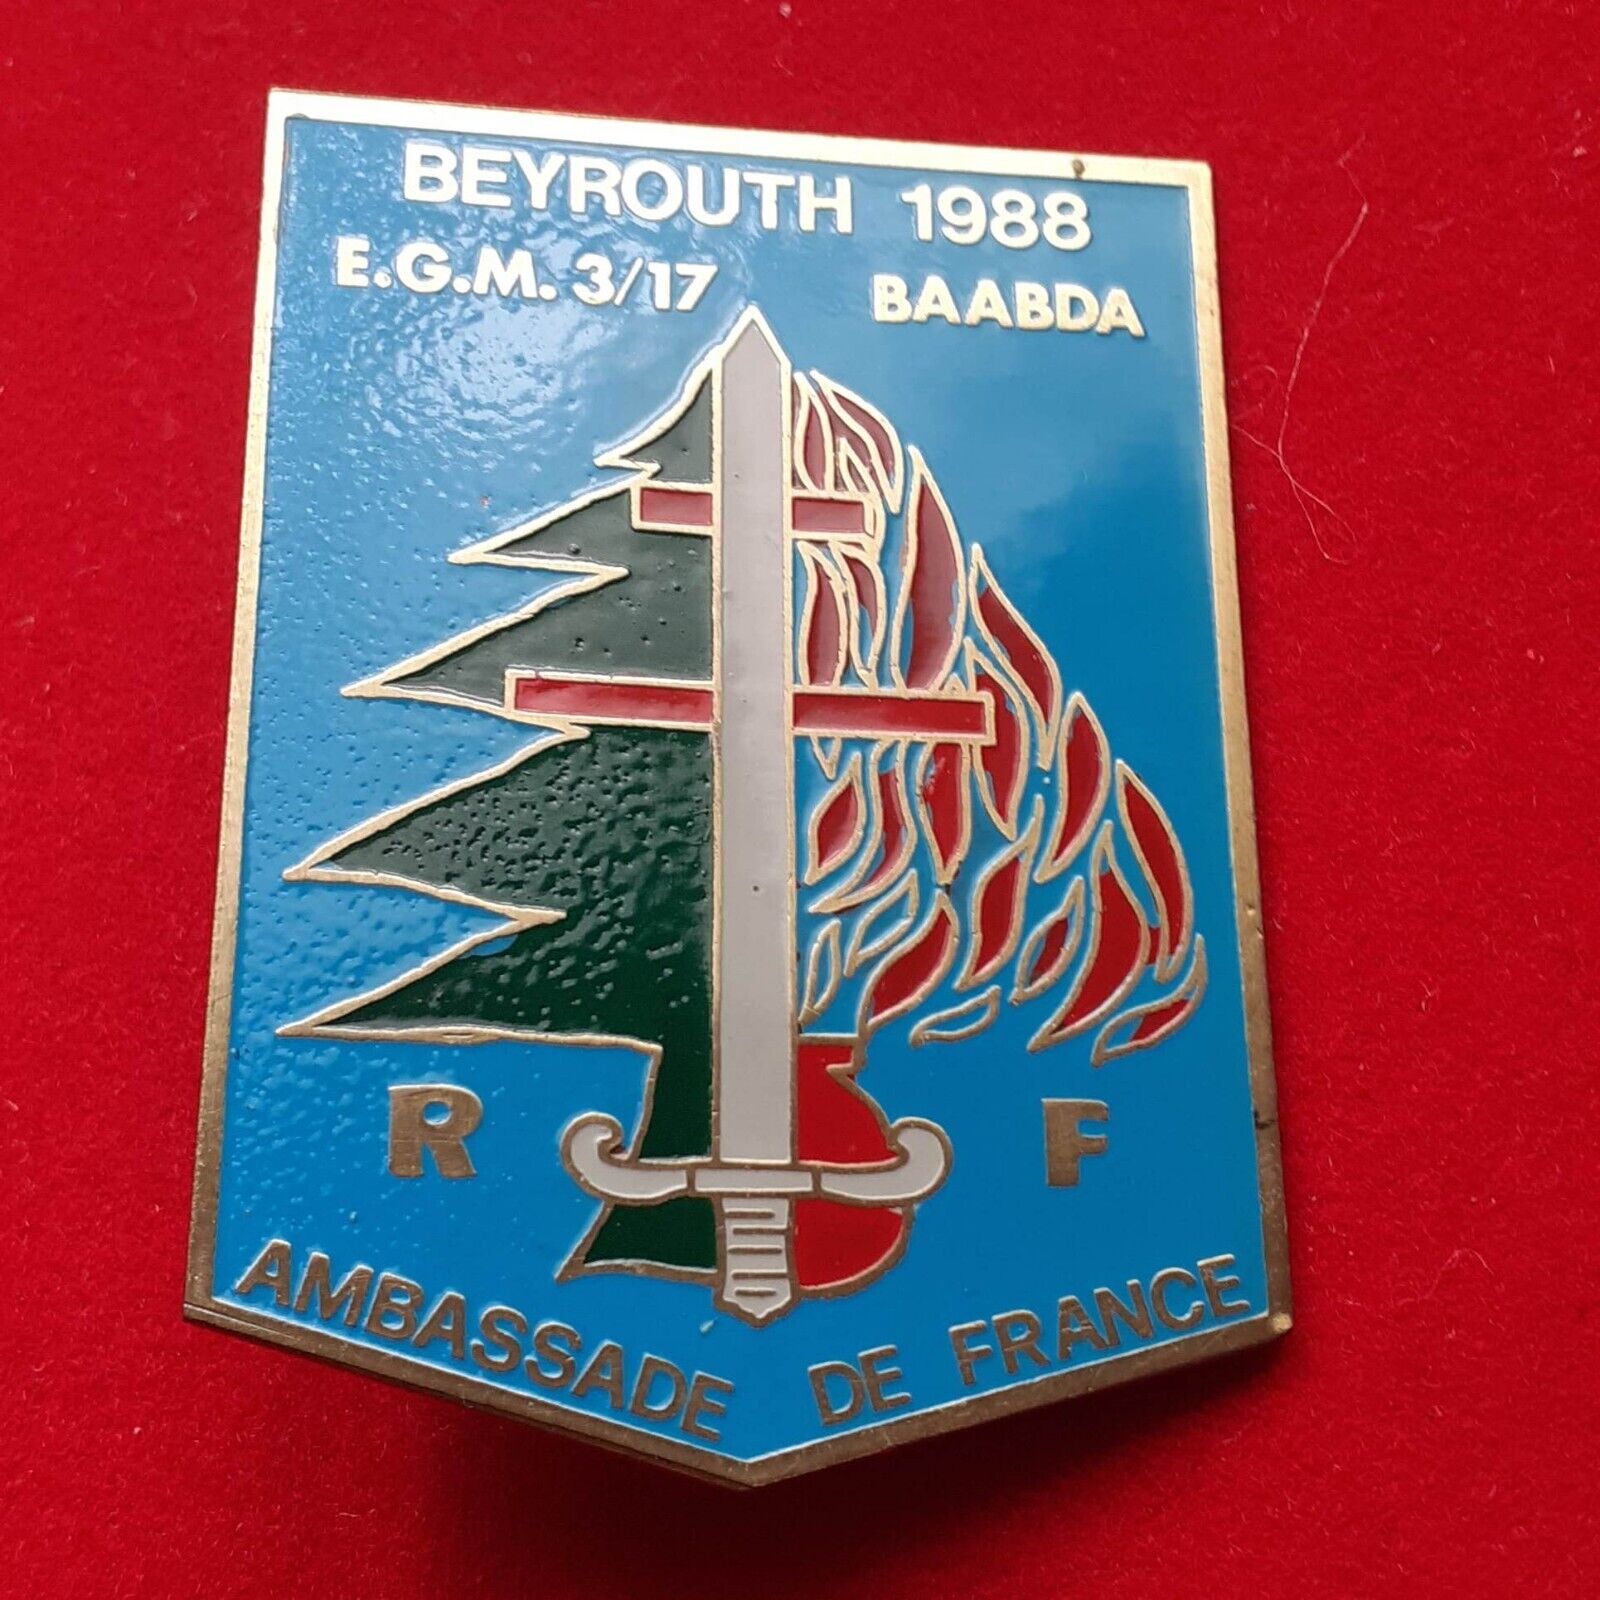 1988 E.G.M 3/17 BEIRUT.